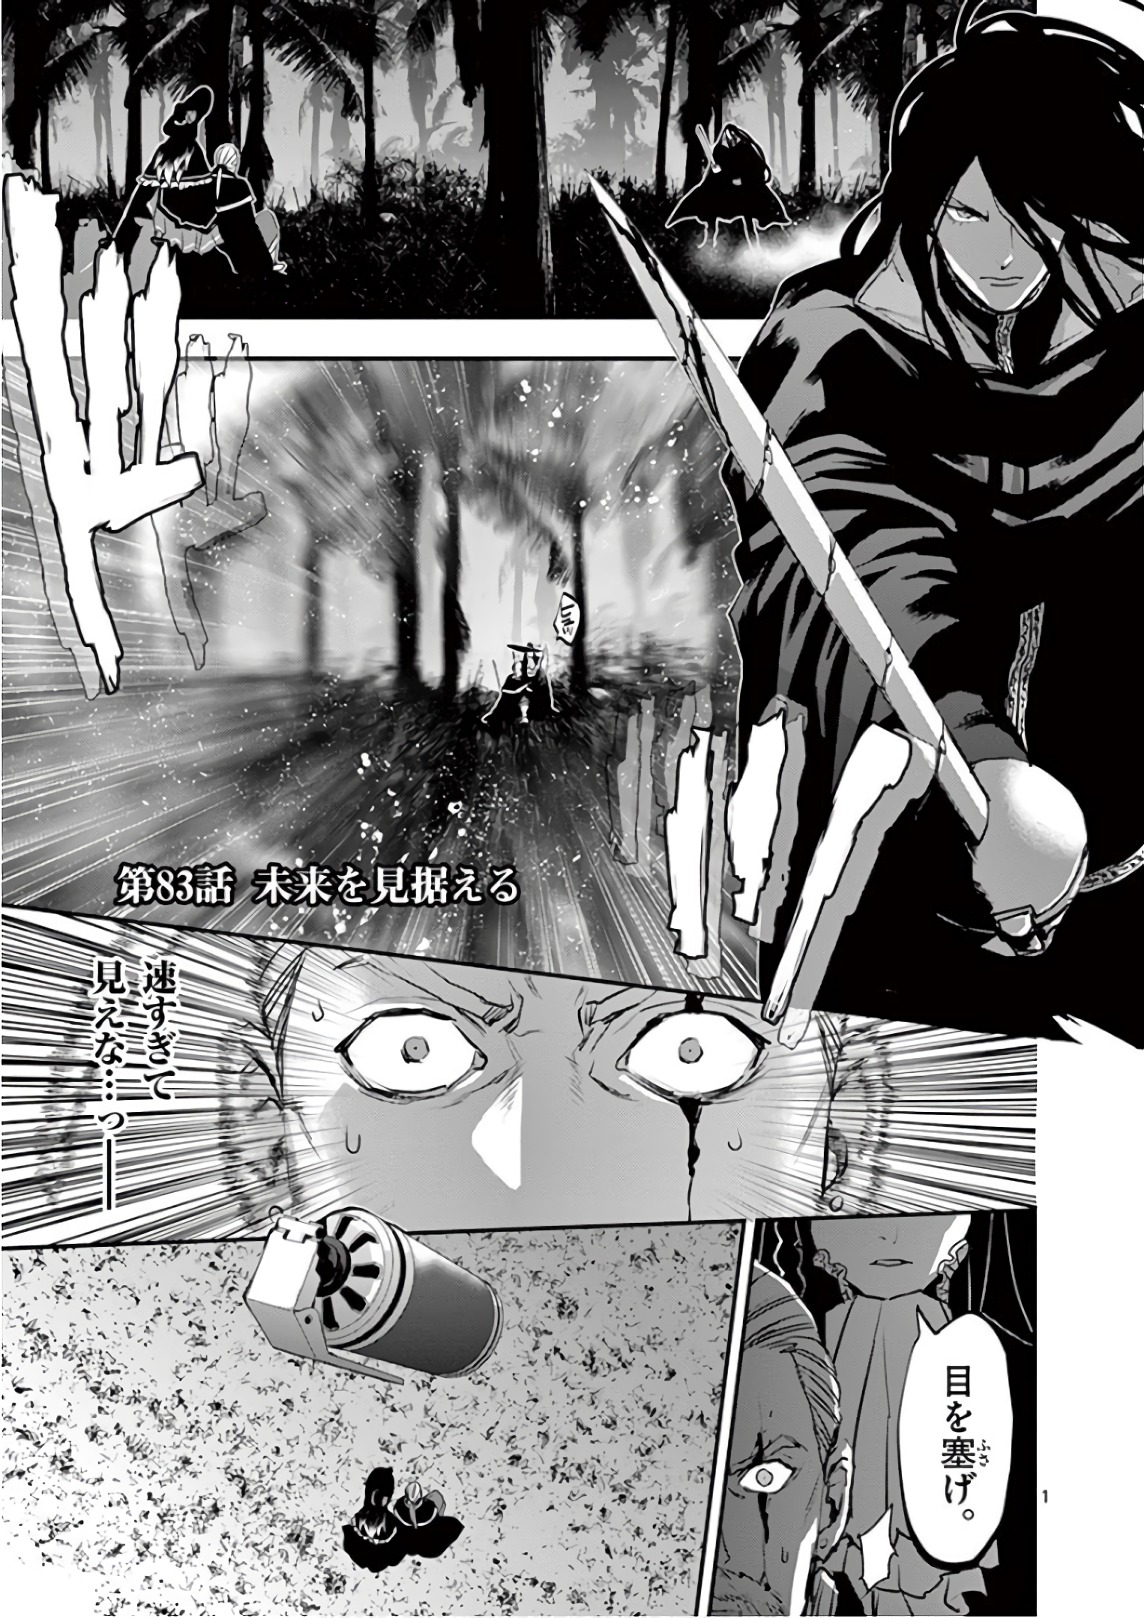 Ginrou Bloodborne - Chapter 83 - Page 1